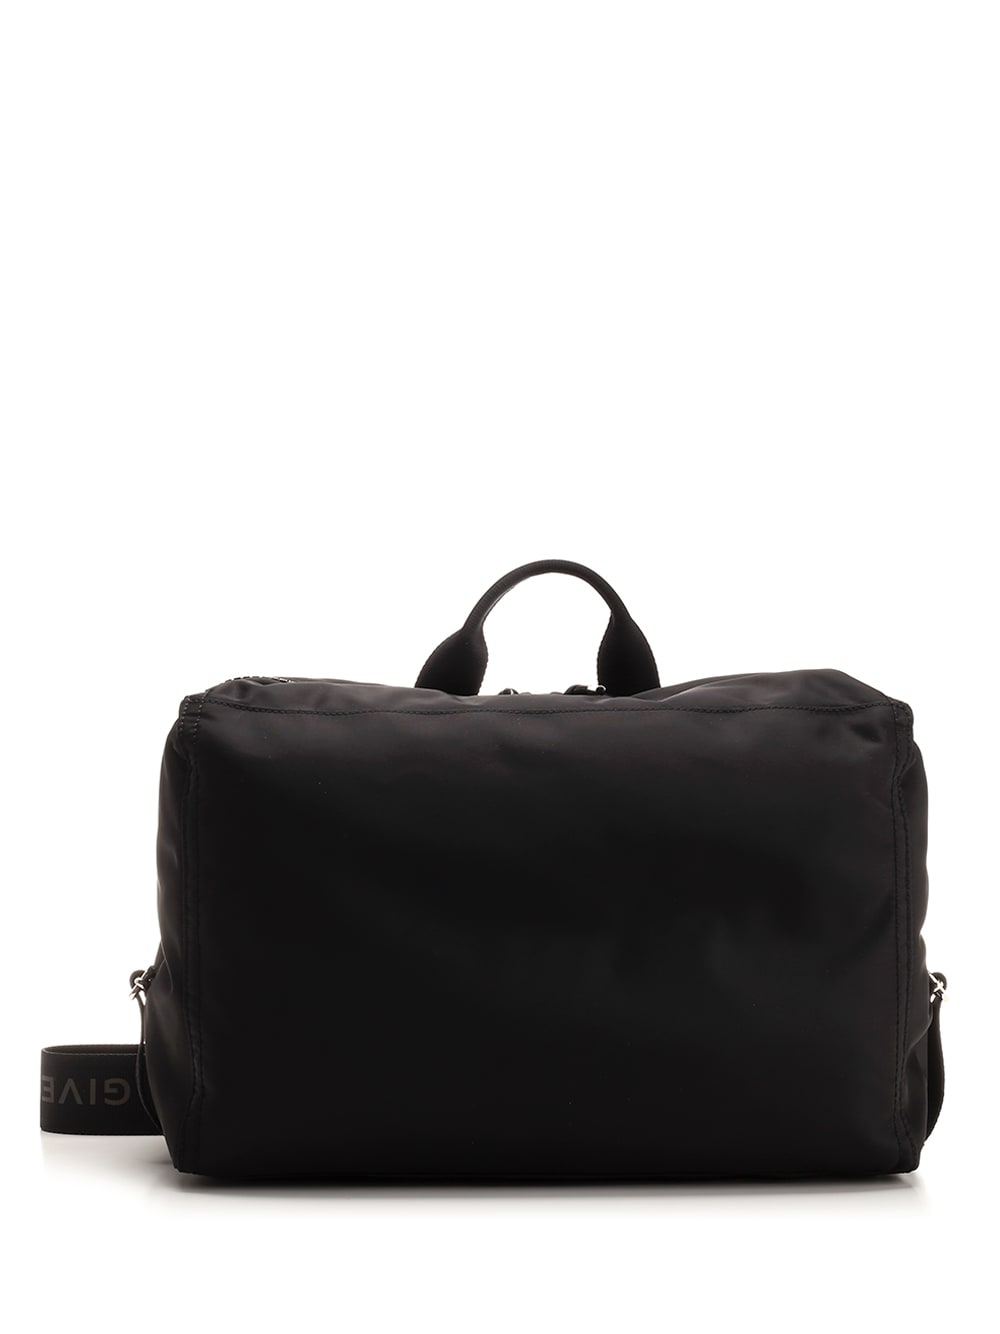 Givenchy Medium Pandora Bag In Nylon In Black